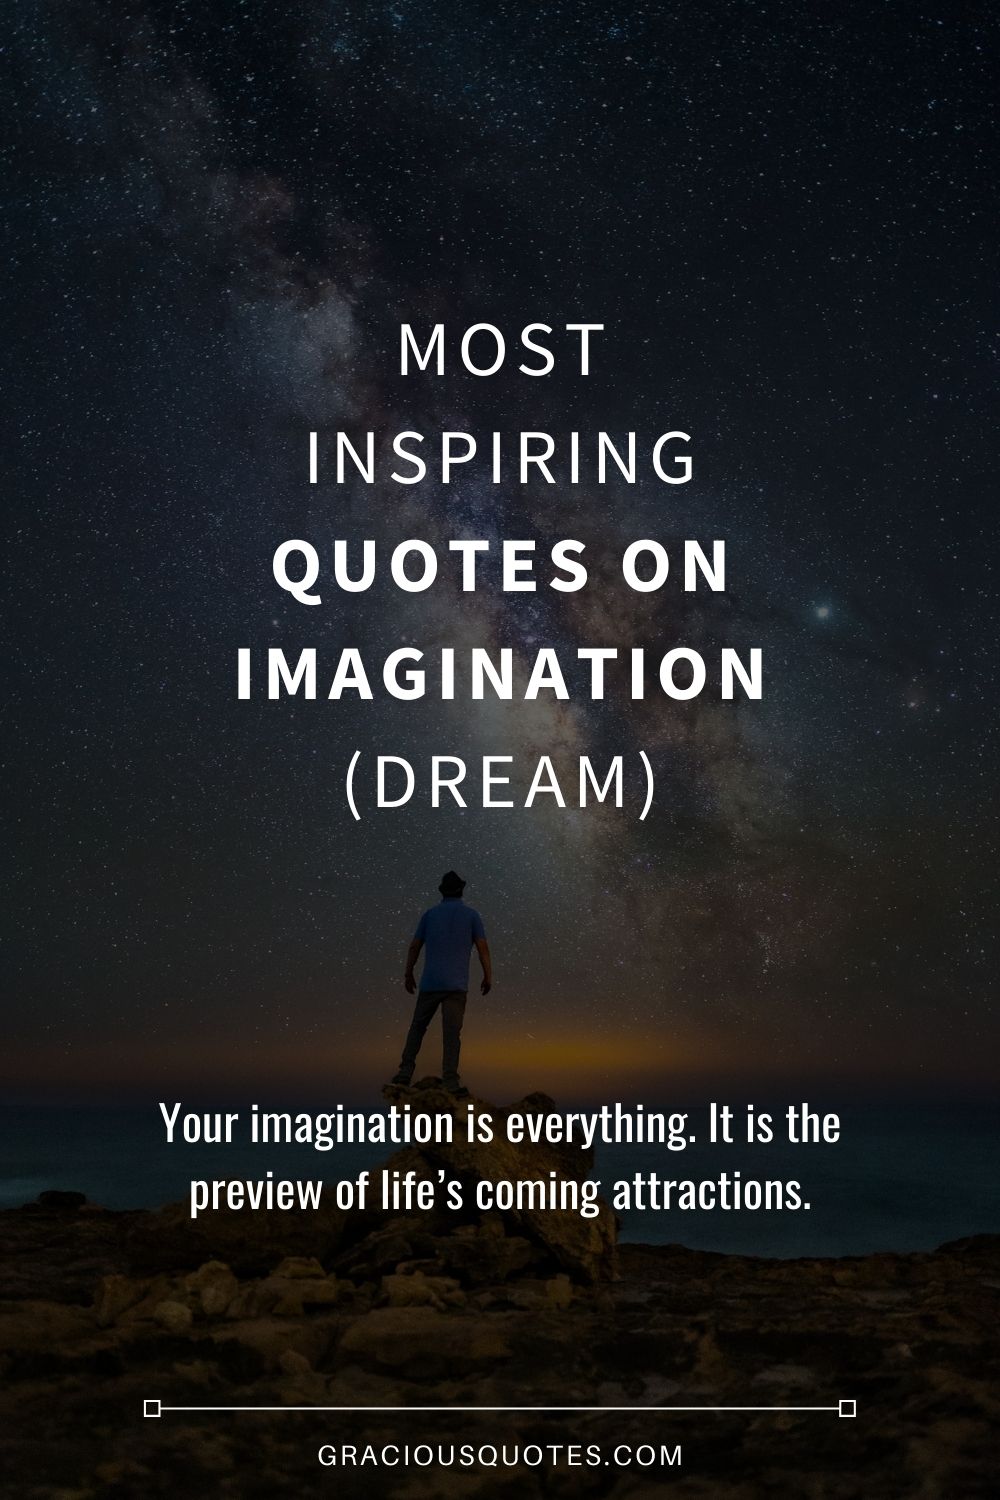 Most Inspiring Quotes on Imagination (DREAM) - Gracious Quotes